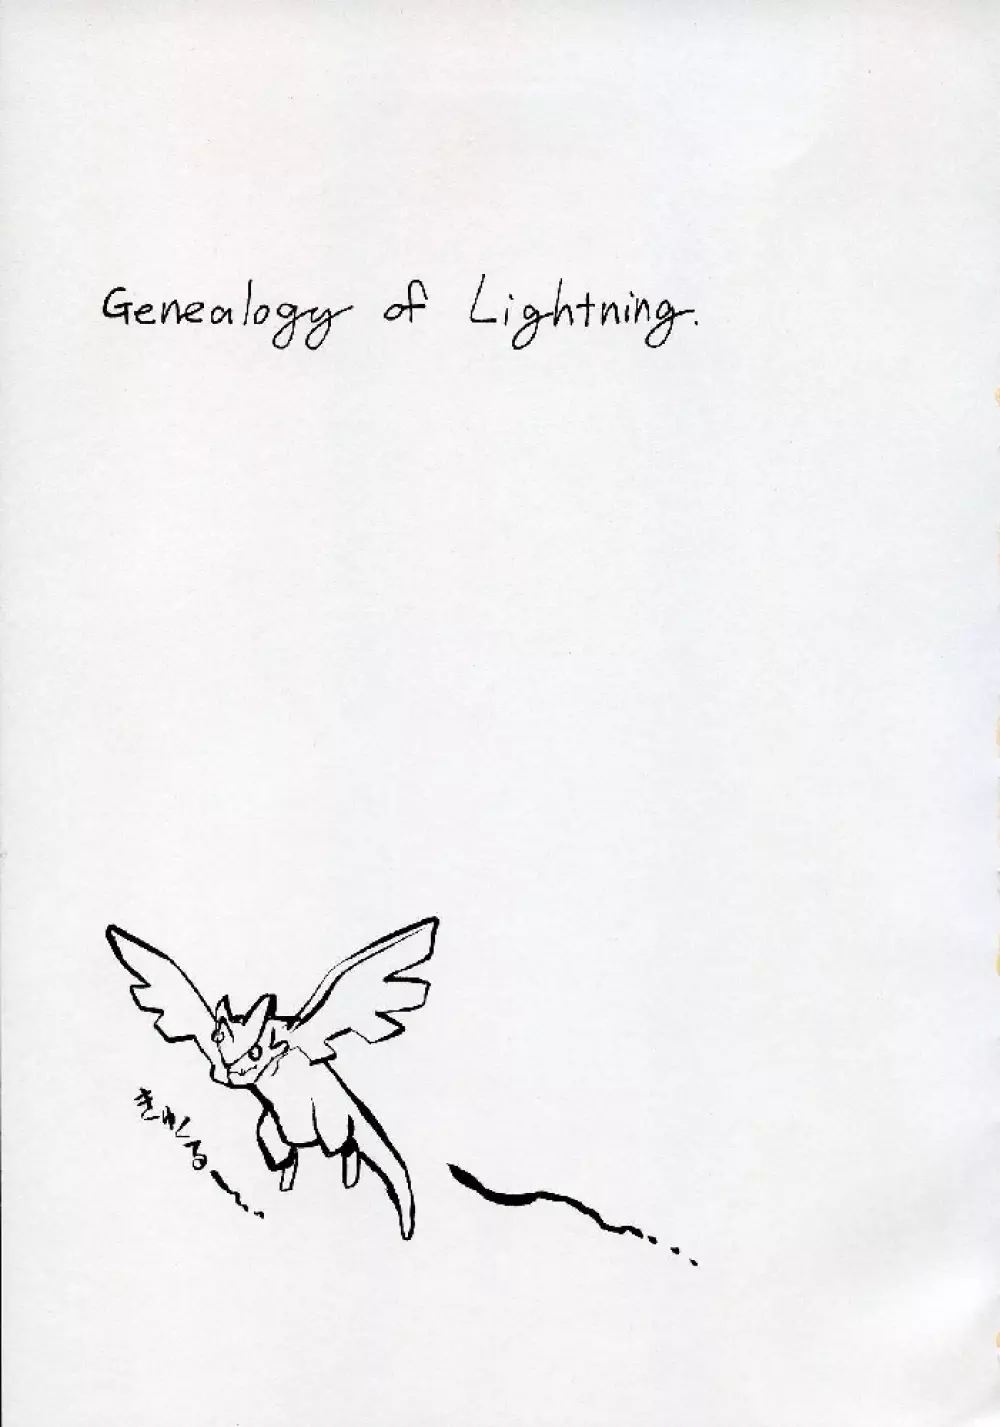 Genealogy of Lightning - page2